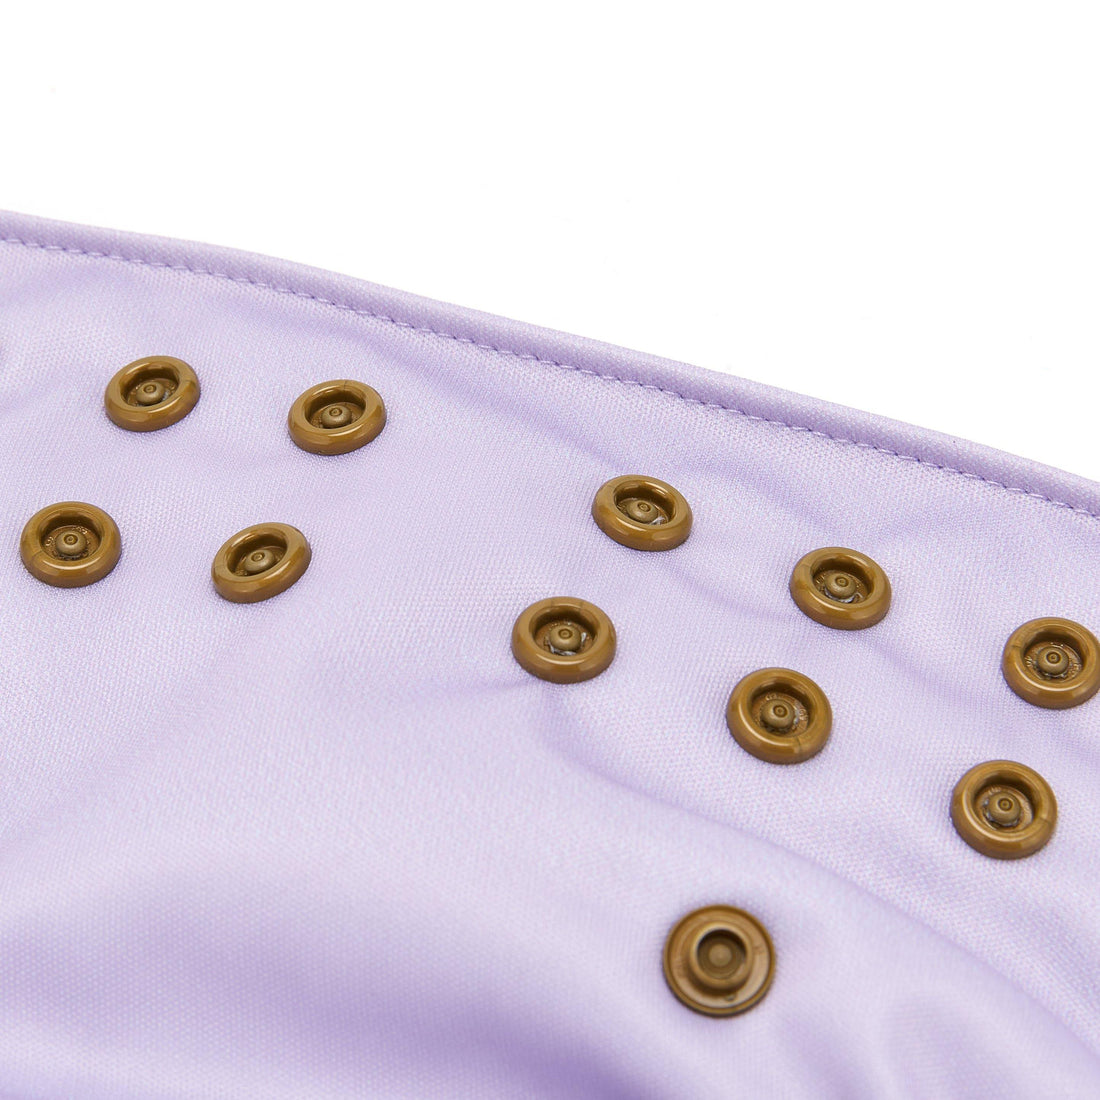 Fudgey TRIMS™ Pocket Nappy - Lilac - Fudgey Pants